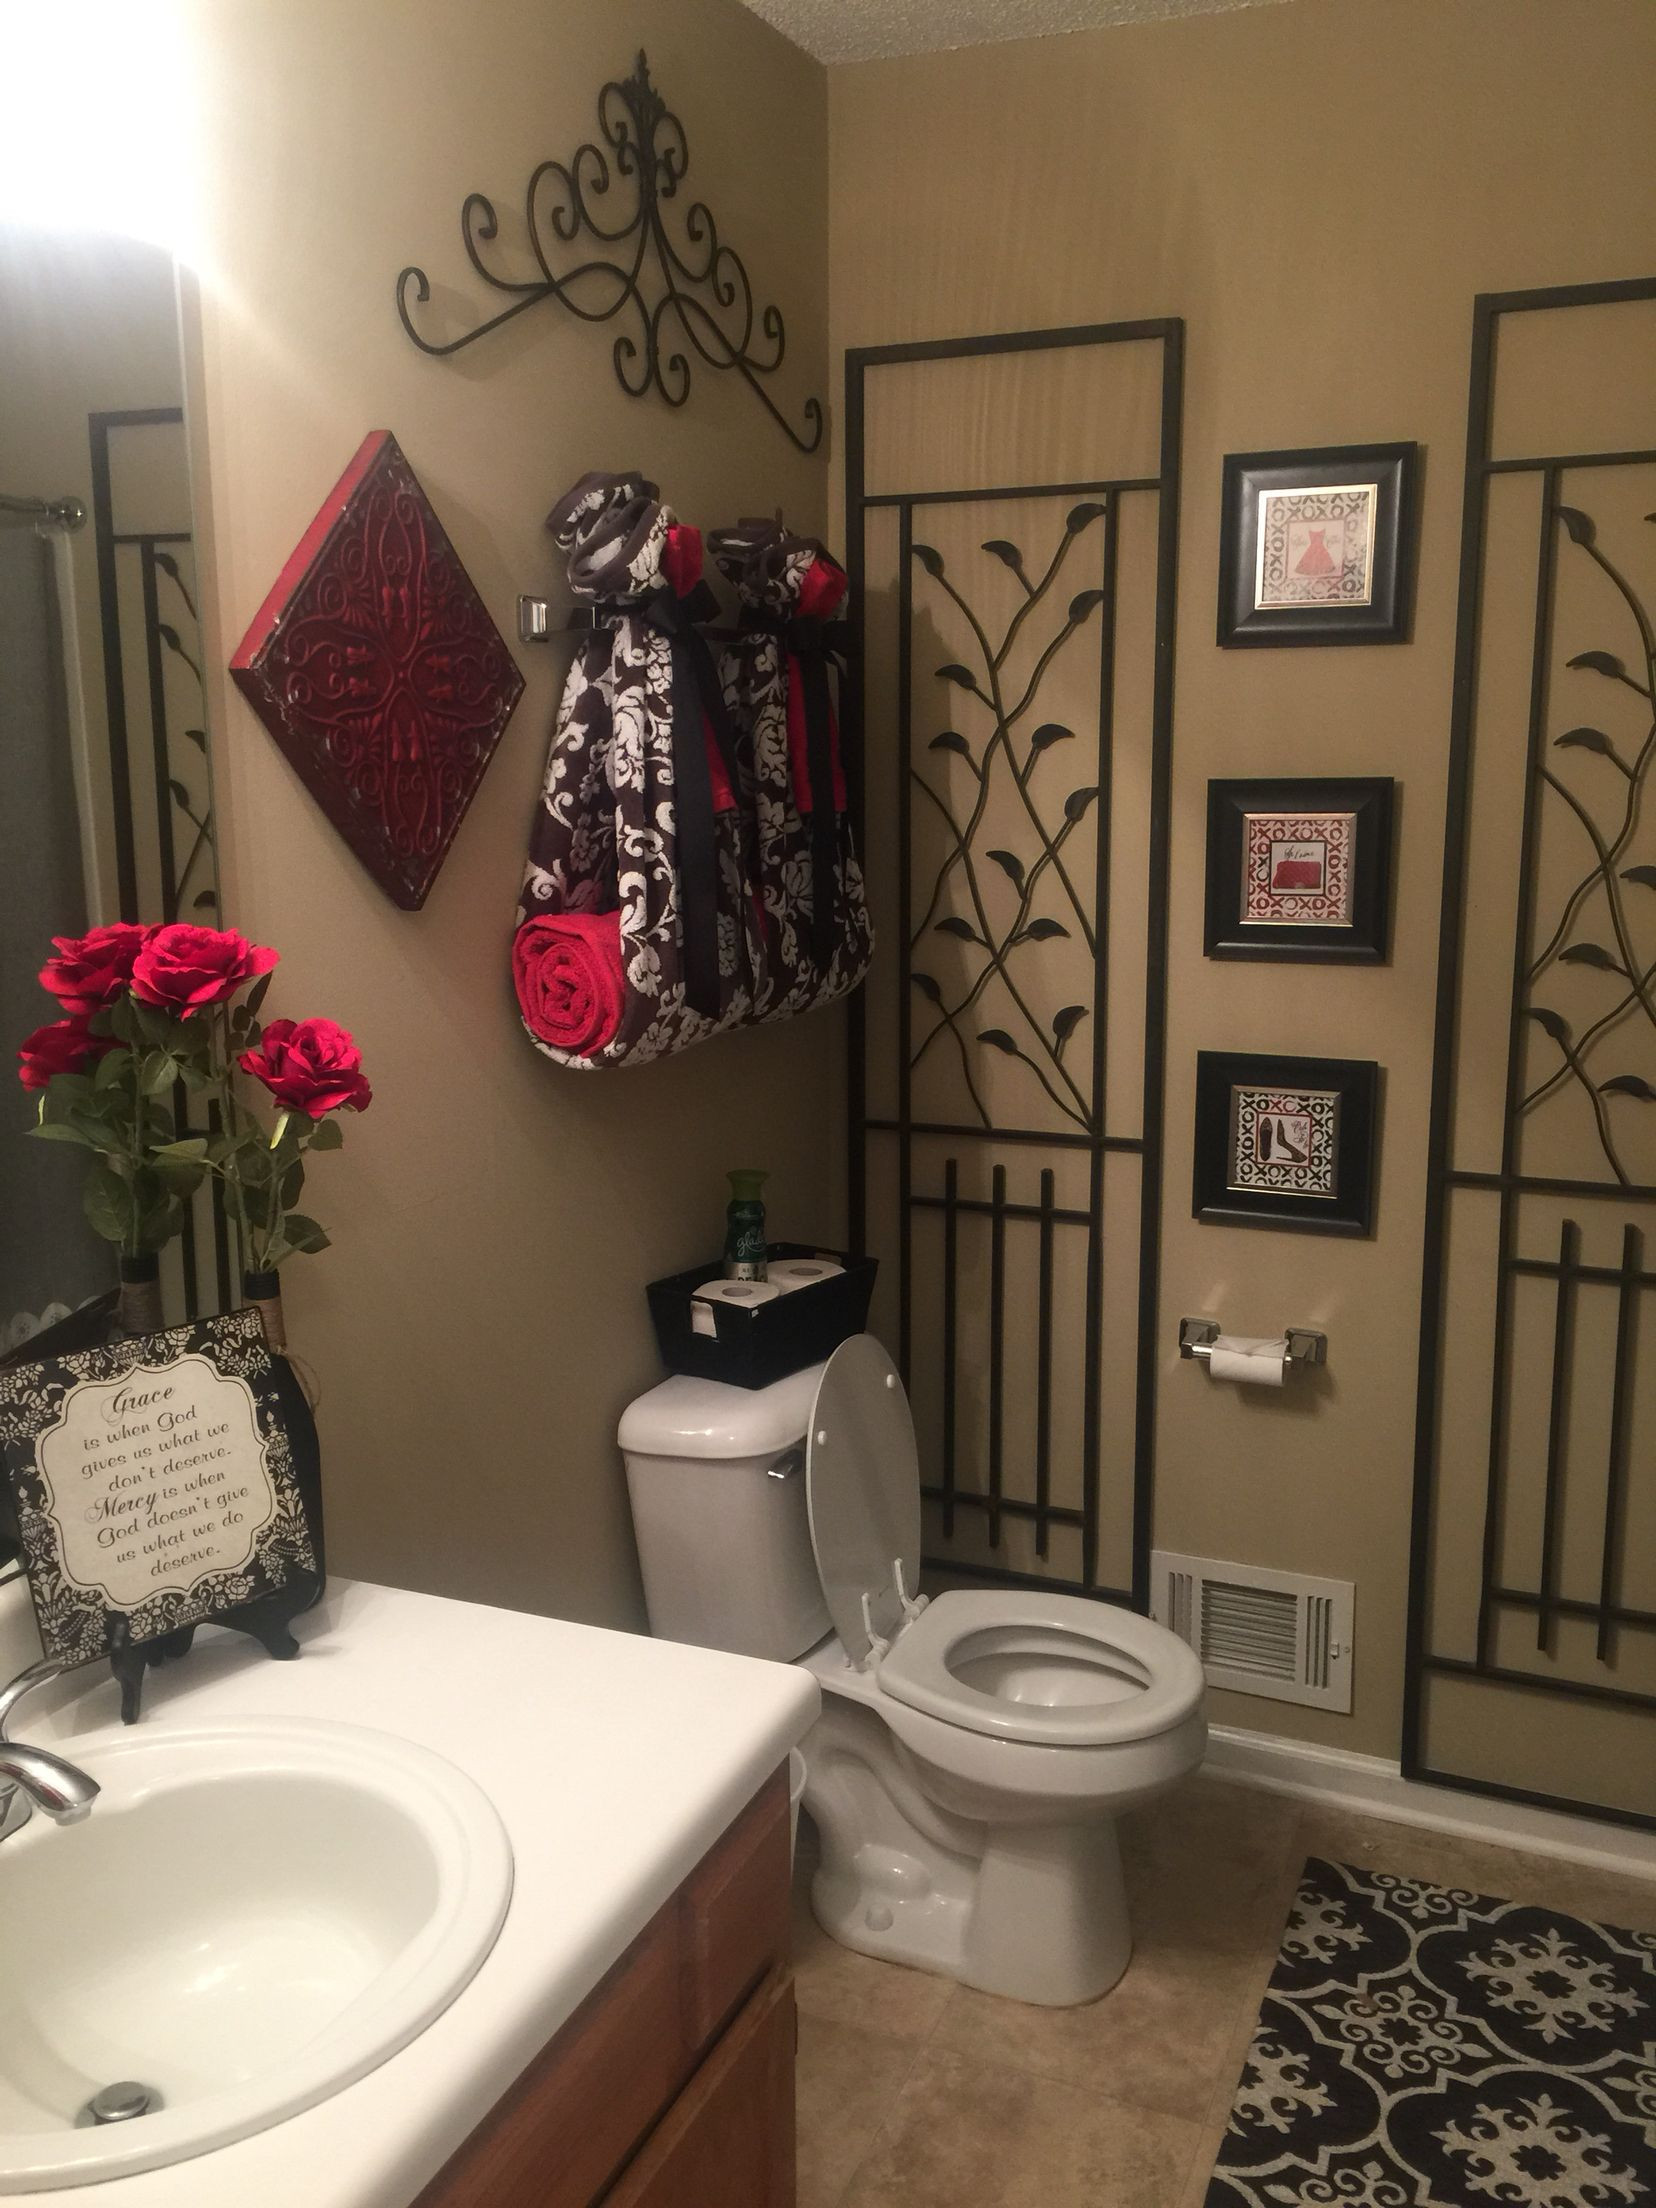 Marilyn Monroe Bathroom Decor
 Red and black bathroom